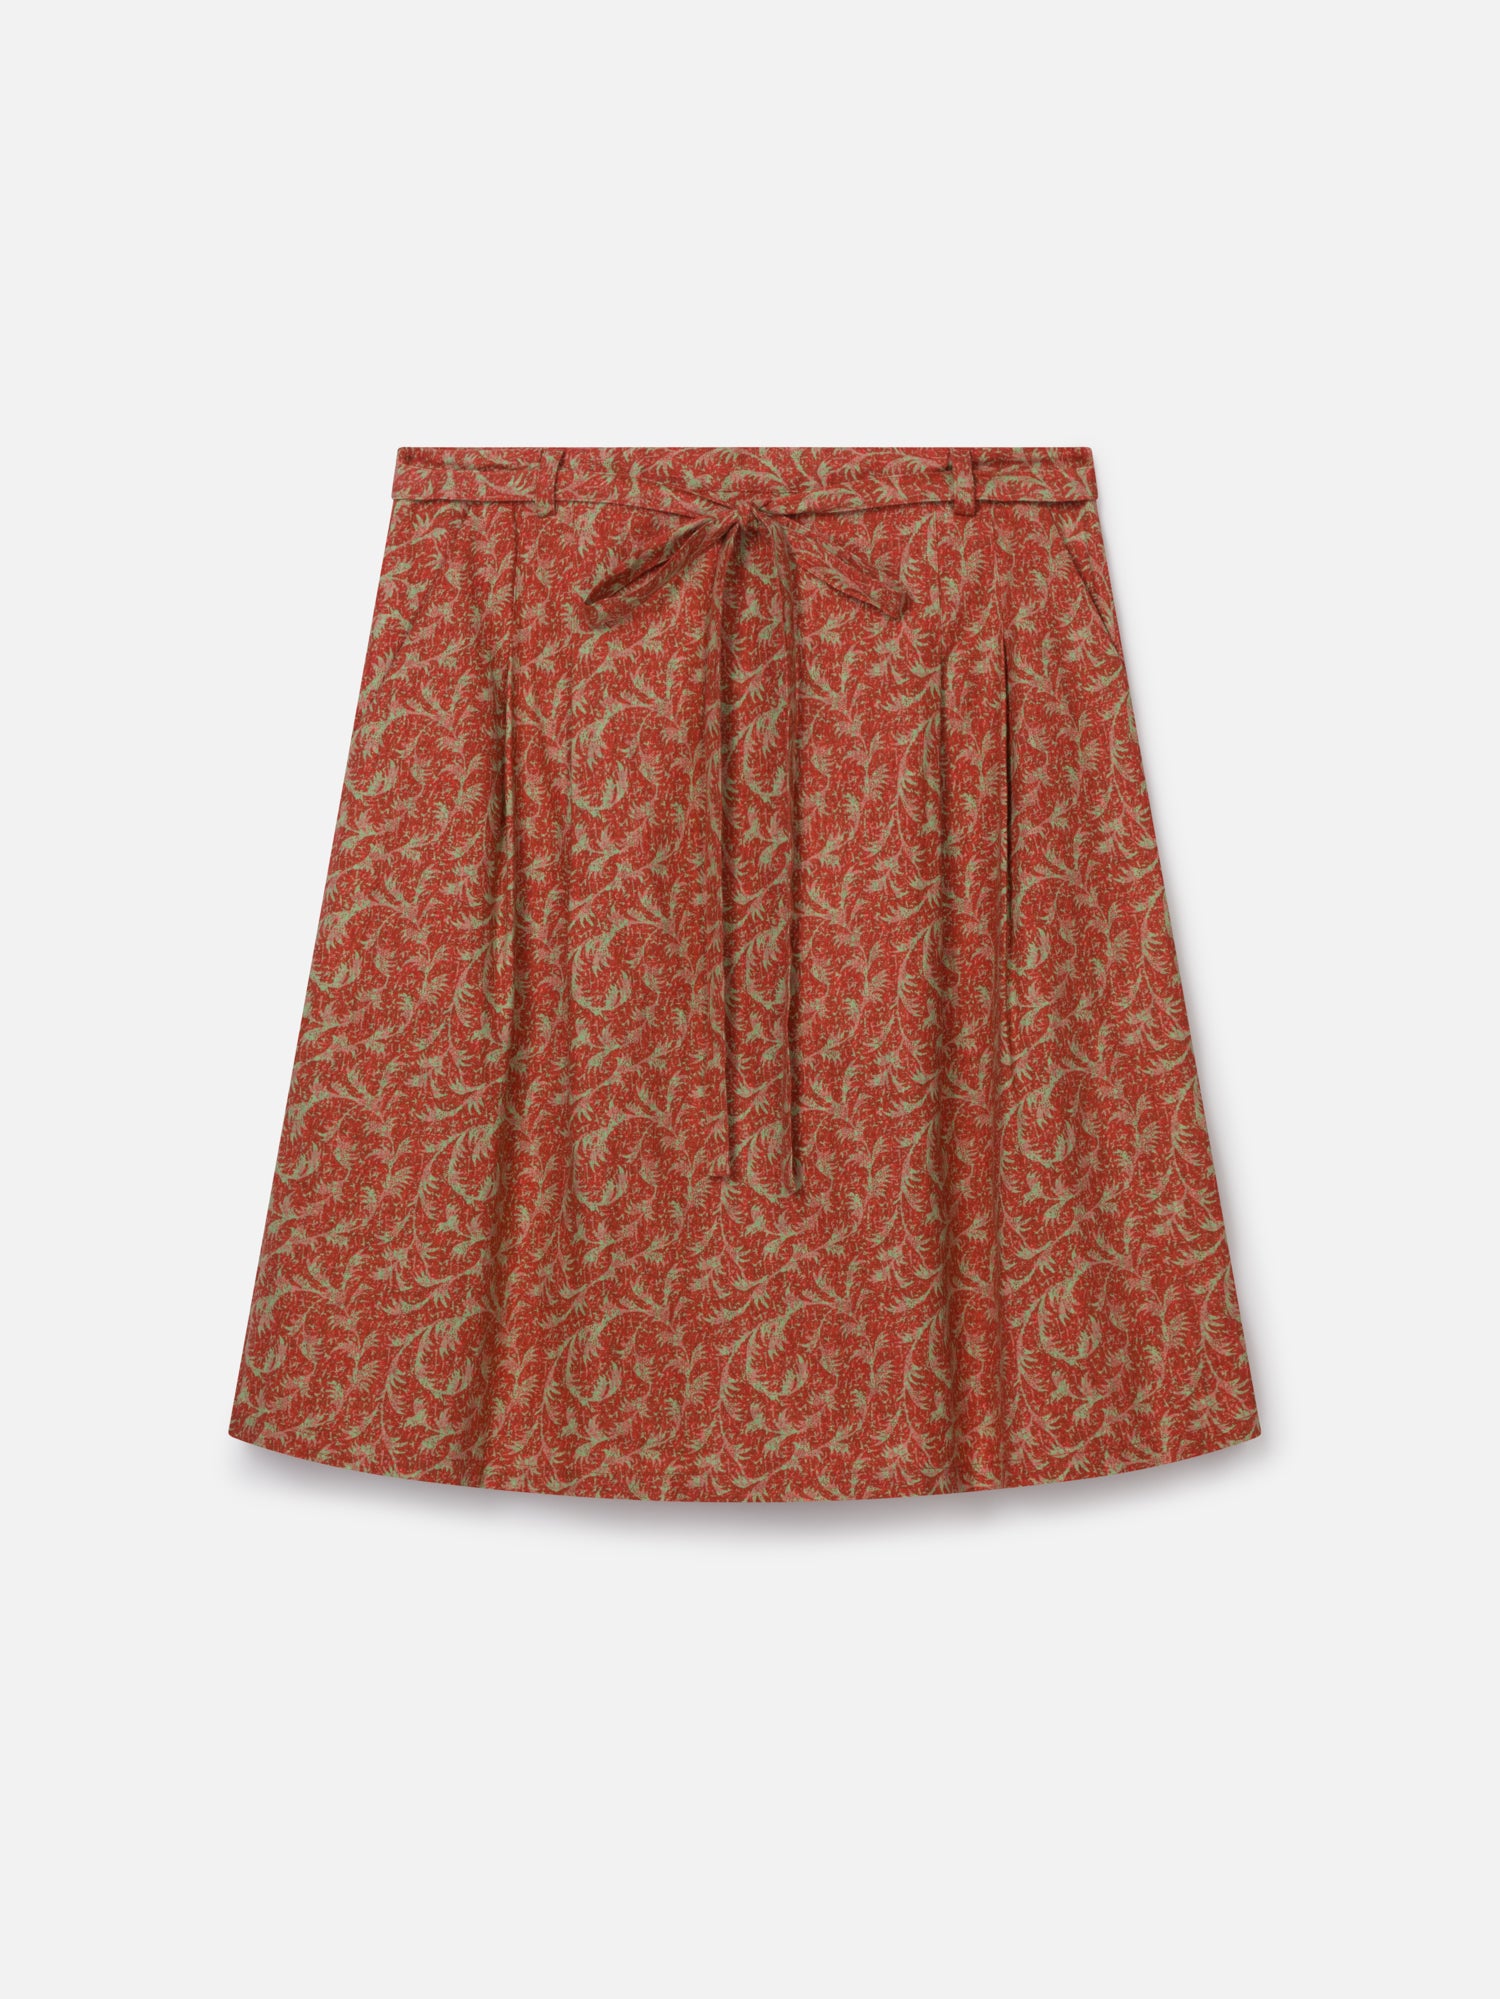 Zenobia Hemp Short Skirt - Dark Clay Orange